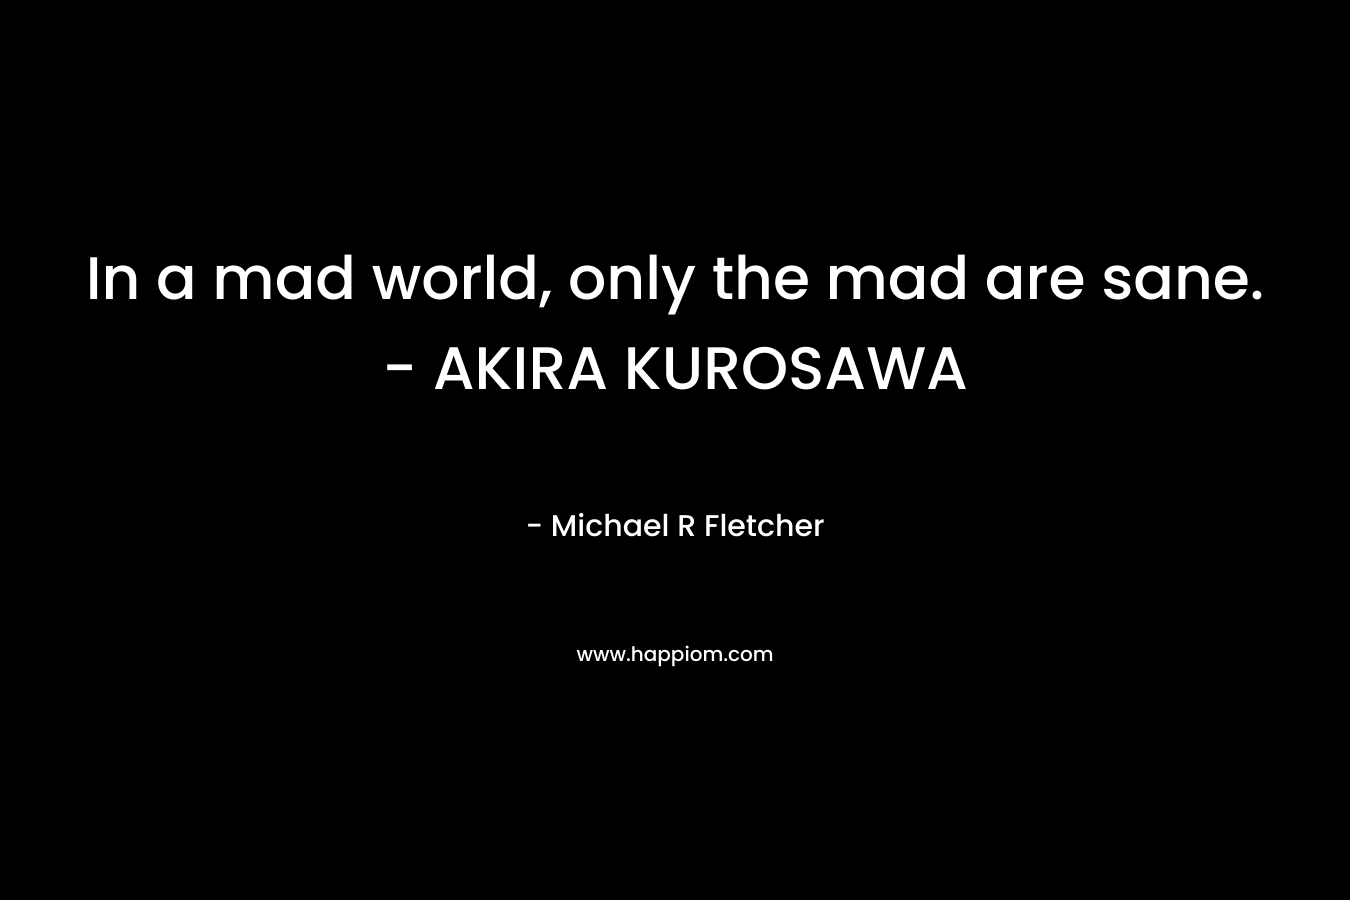 In a mad world, only the mad are sane. - AKIRA KUROSAWA